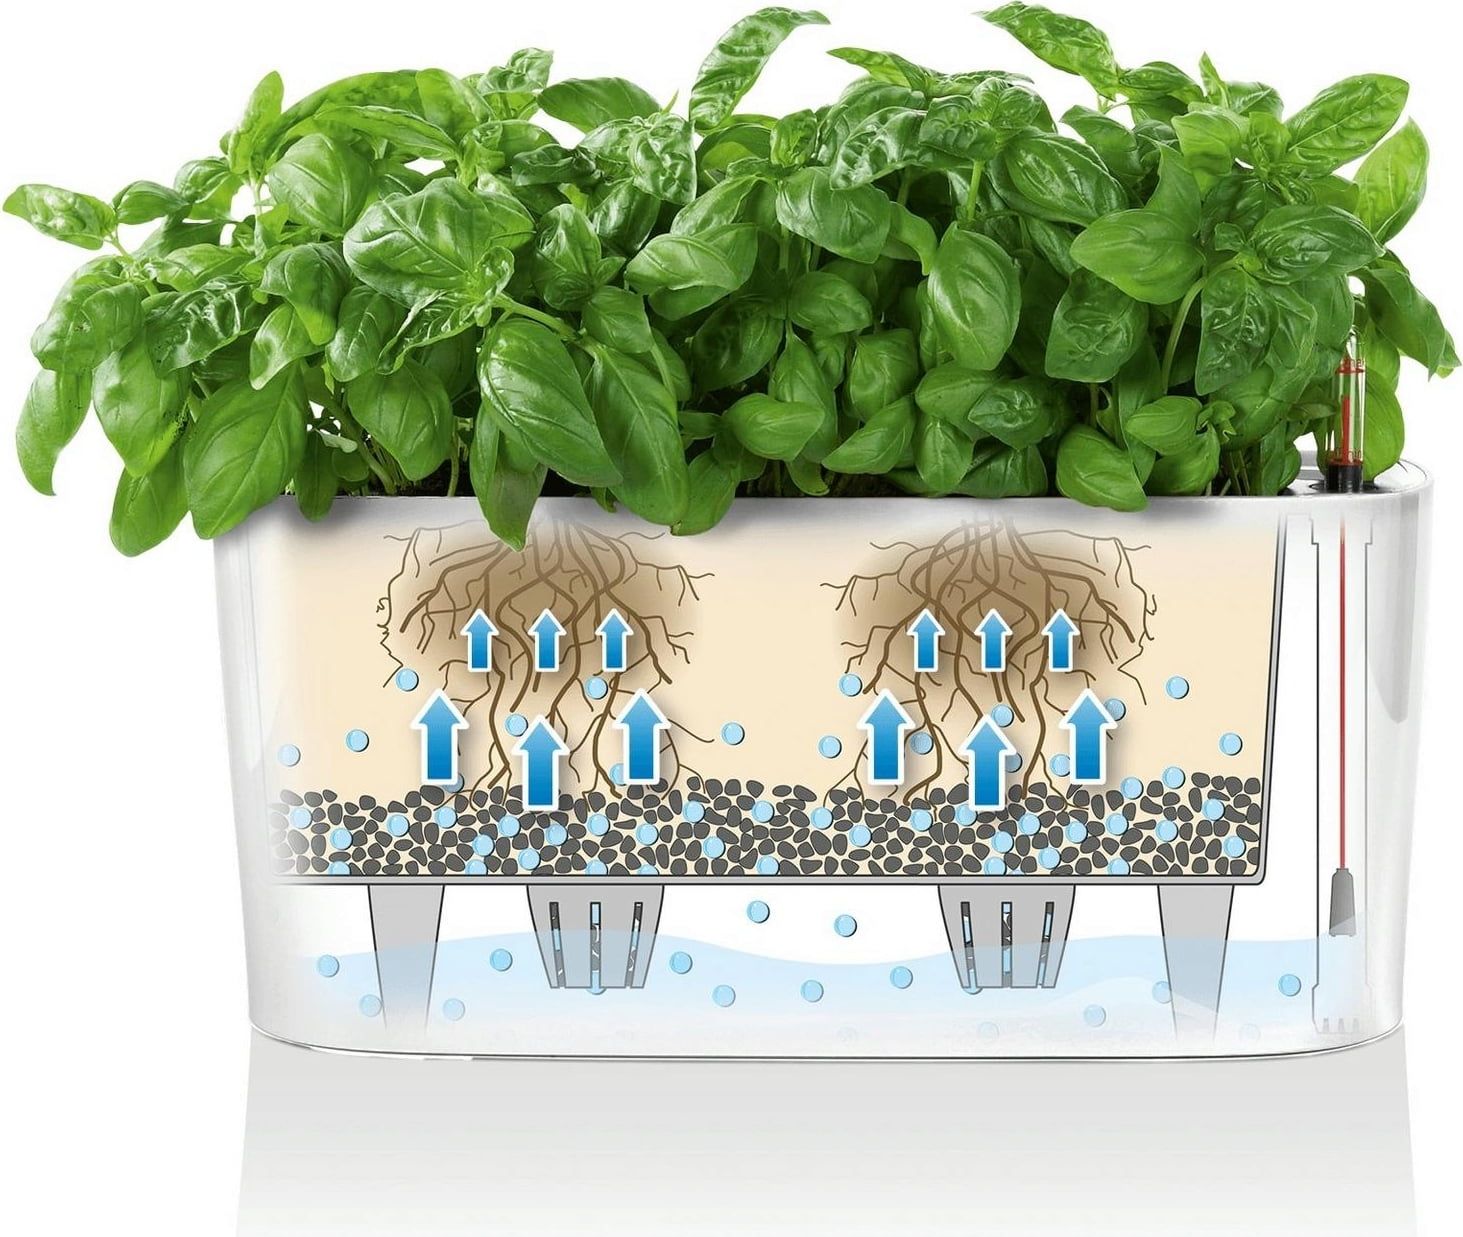 LECHUZA Self-Watering Planters - USA